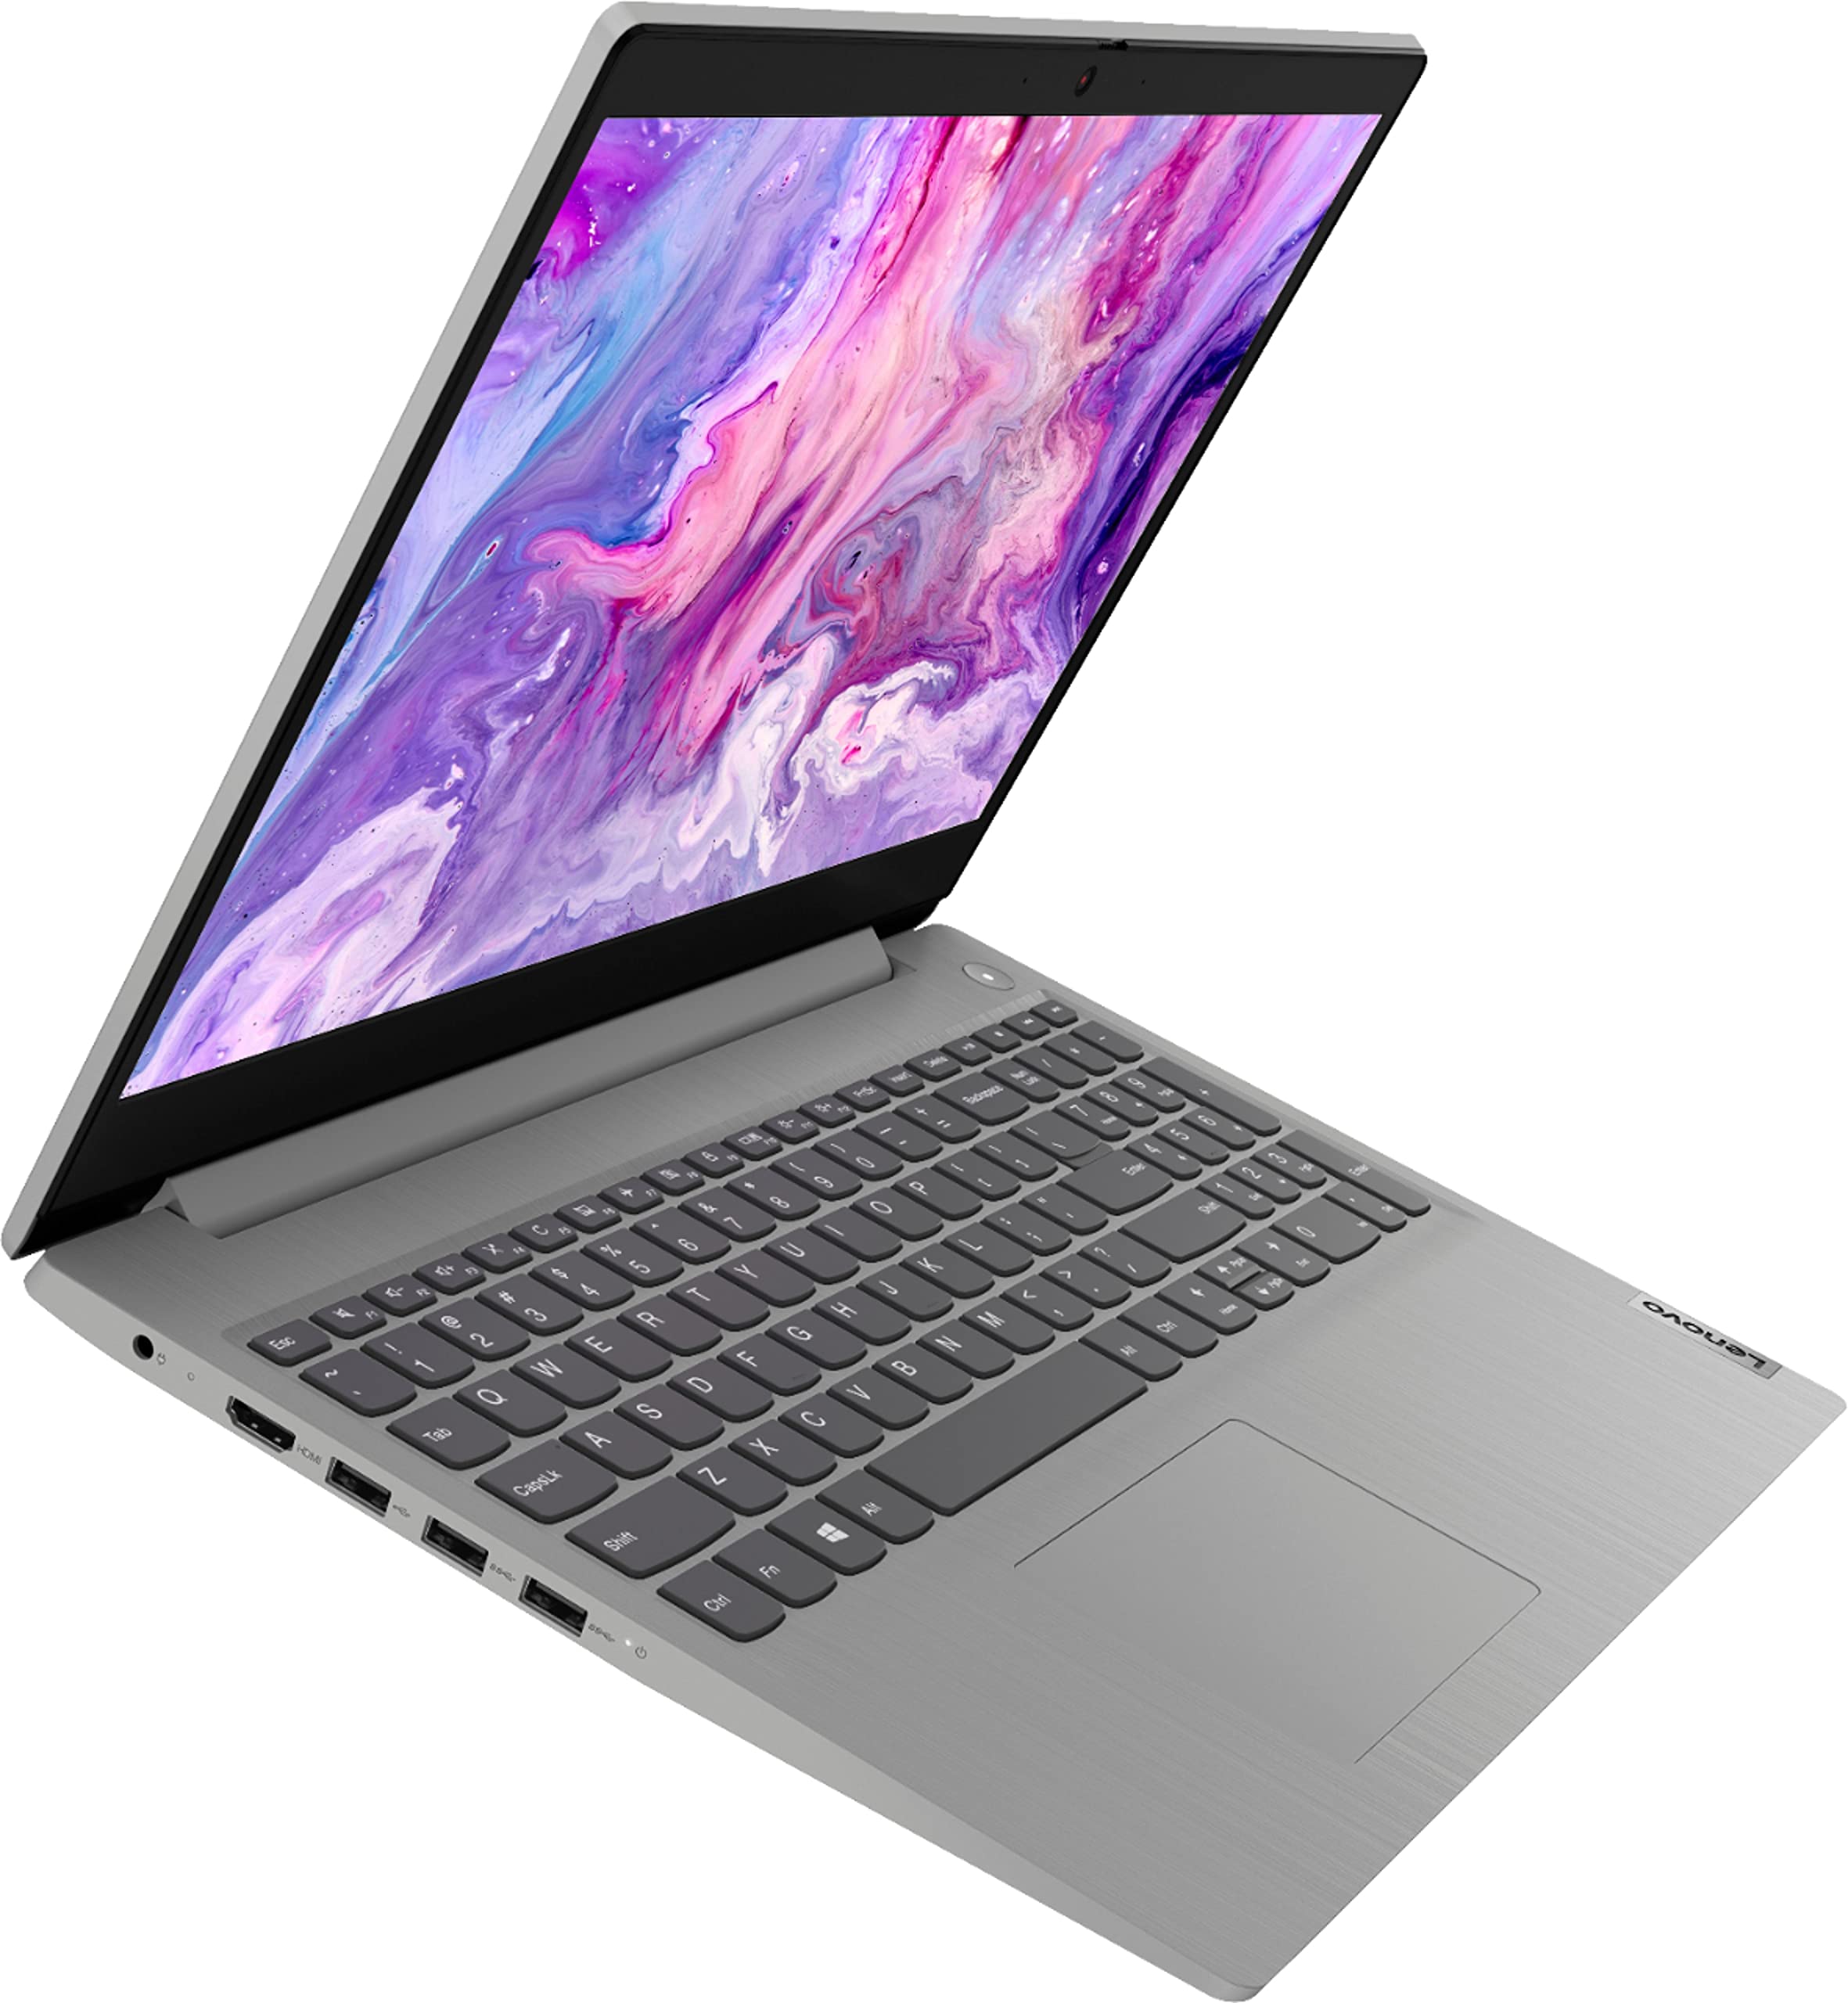 Lenovo 2022 15 Touchscreen Business Laptop, 15.6" Full HD Touch Screen, Intel Quad-Core i5 11th Gen i5-1135G7, 12GB RAM, 256GB SSD Storage, WiFi 6, Backlit Keyboard, Windows 10 S, YSC Accesory